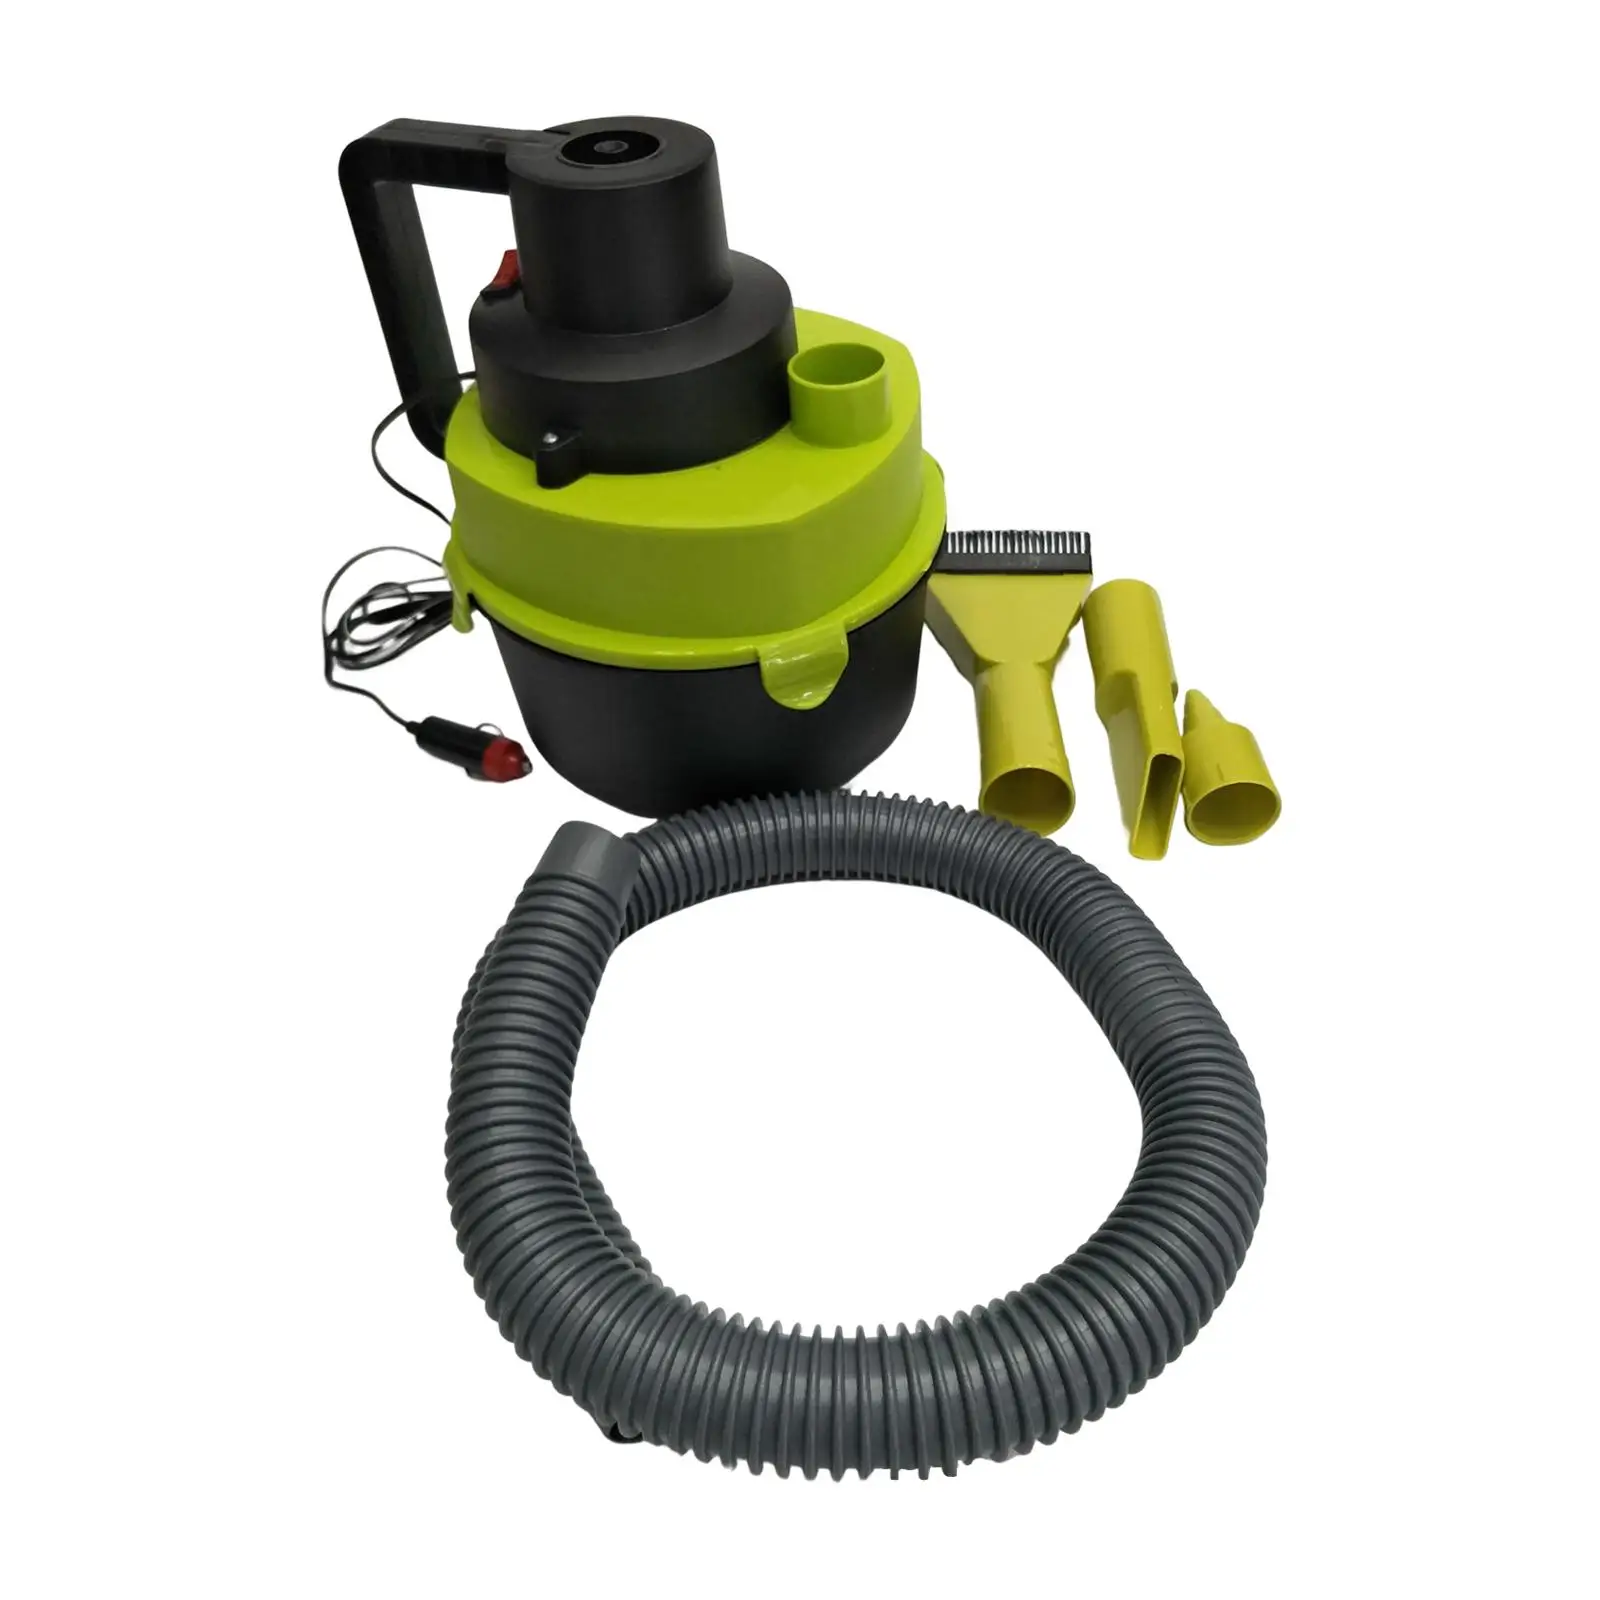 dry wet Vacuum Dual Use Blowing Function Handheld 4L Debris Shop Vacuum Cleaner Car Vacuum for Home RV Carpet Trucks Workshop